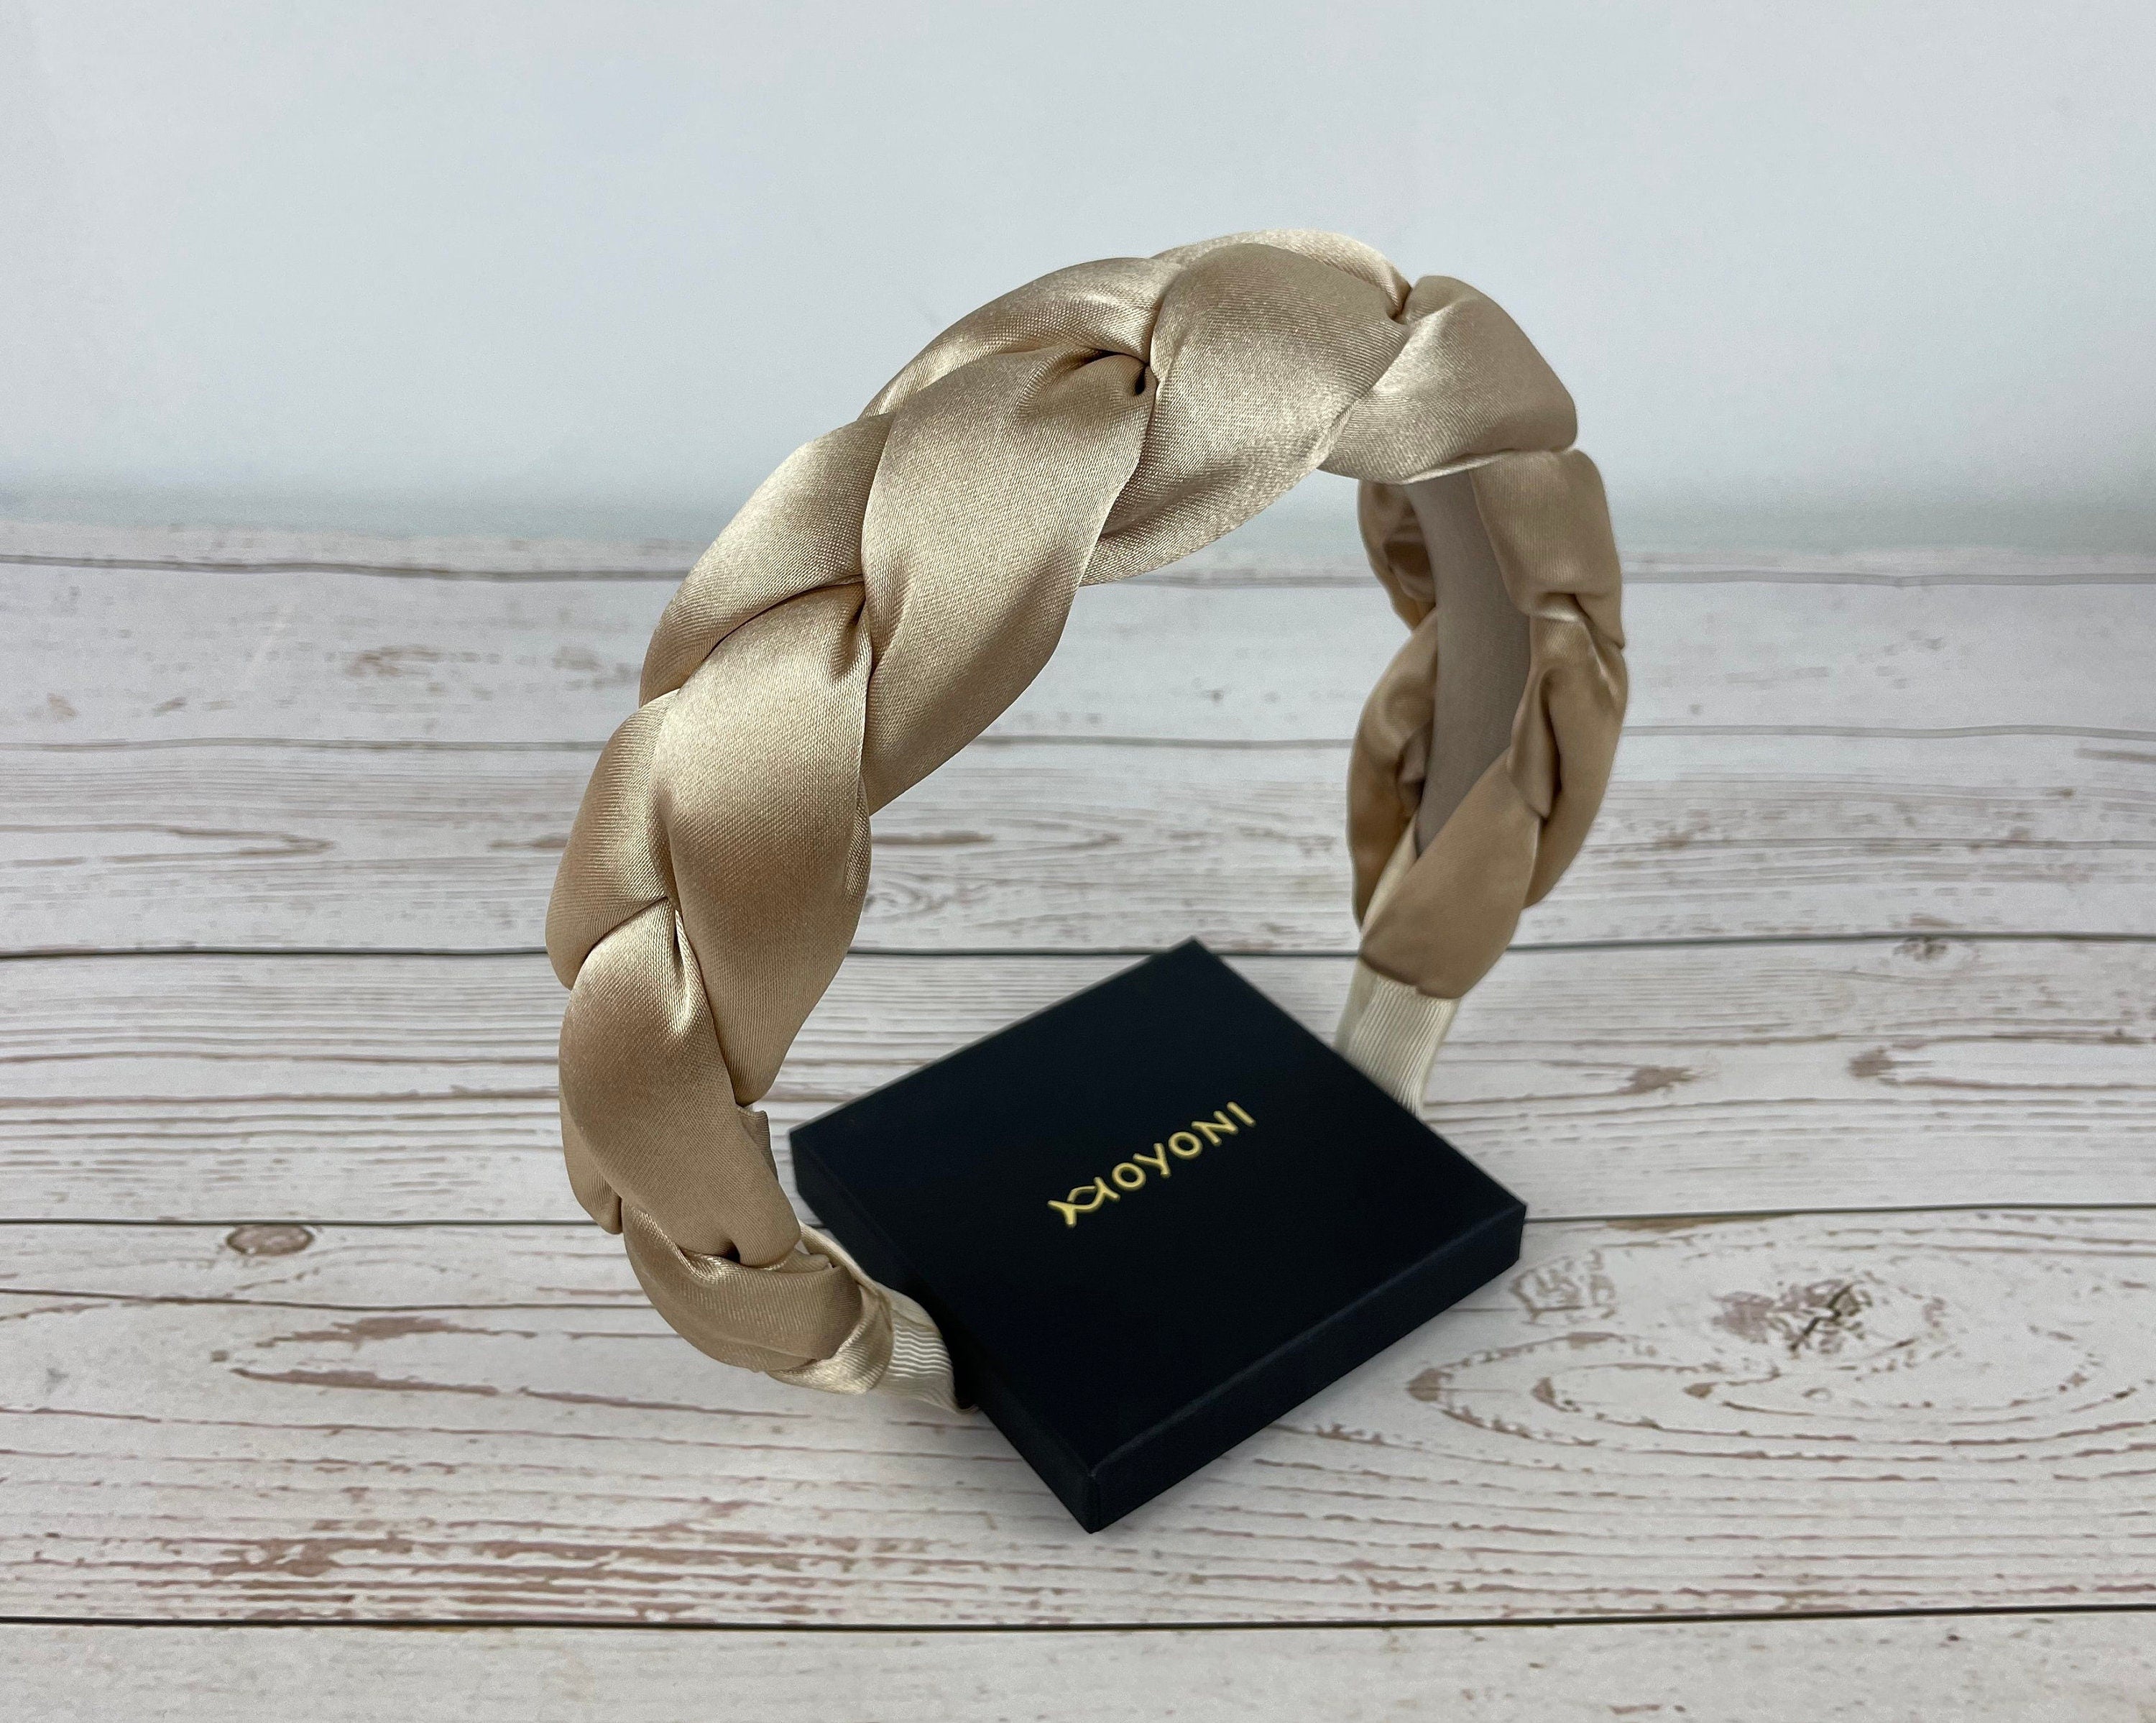 Luxurious and chic, this stylish dark beige satin braided headband is a fashionable statement piece